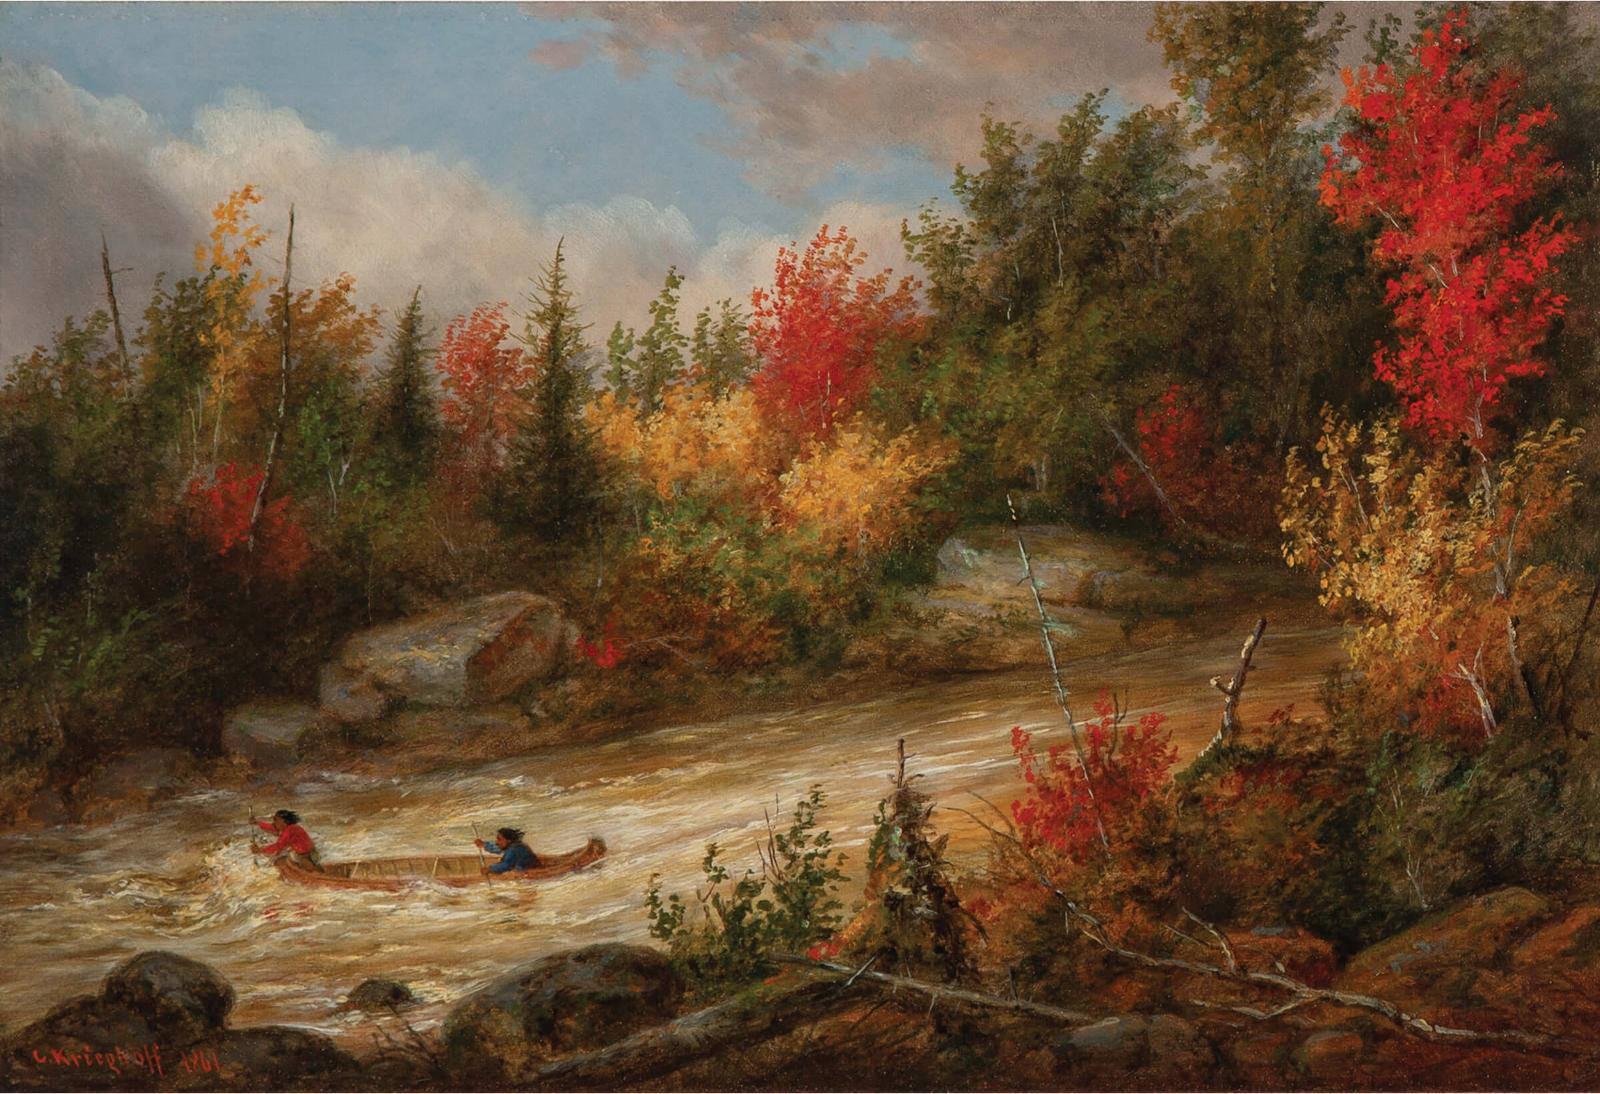 Cornelius David Krieghoff (1815-1872) - Shooting The Rapids, Jacques Cartier River